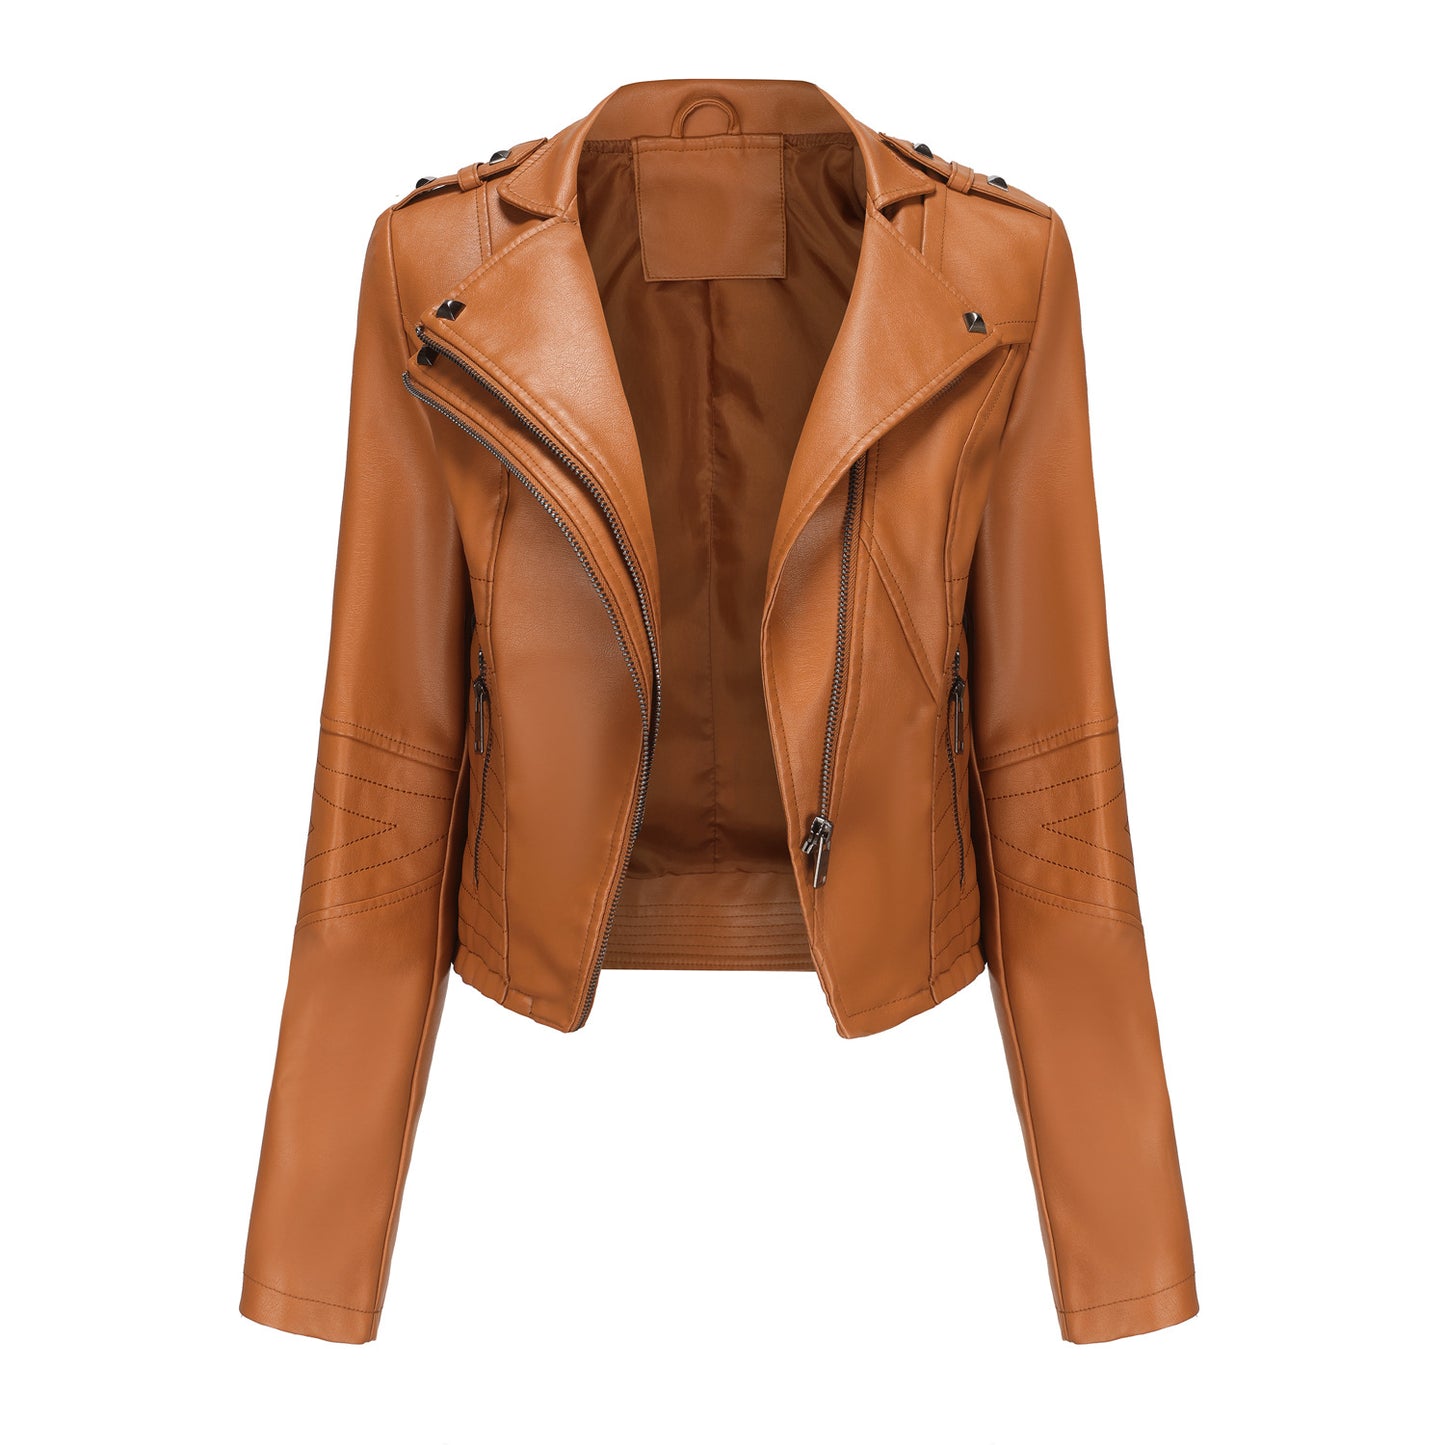 Slim Fit Long Sleeved Spring Autumn Leather Jacket Women Rivet Popular Short Jacket Zipper Leather Jacket NISHE